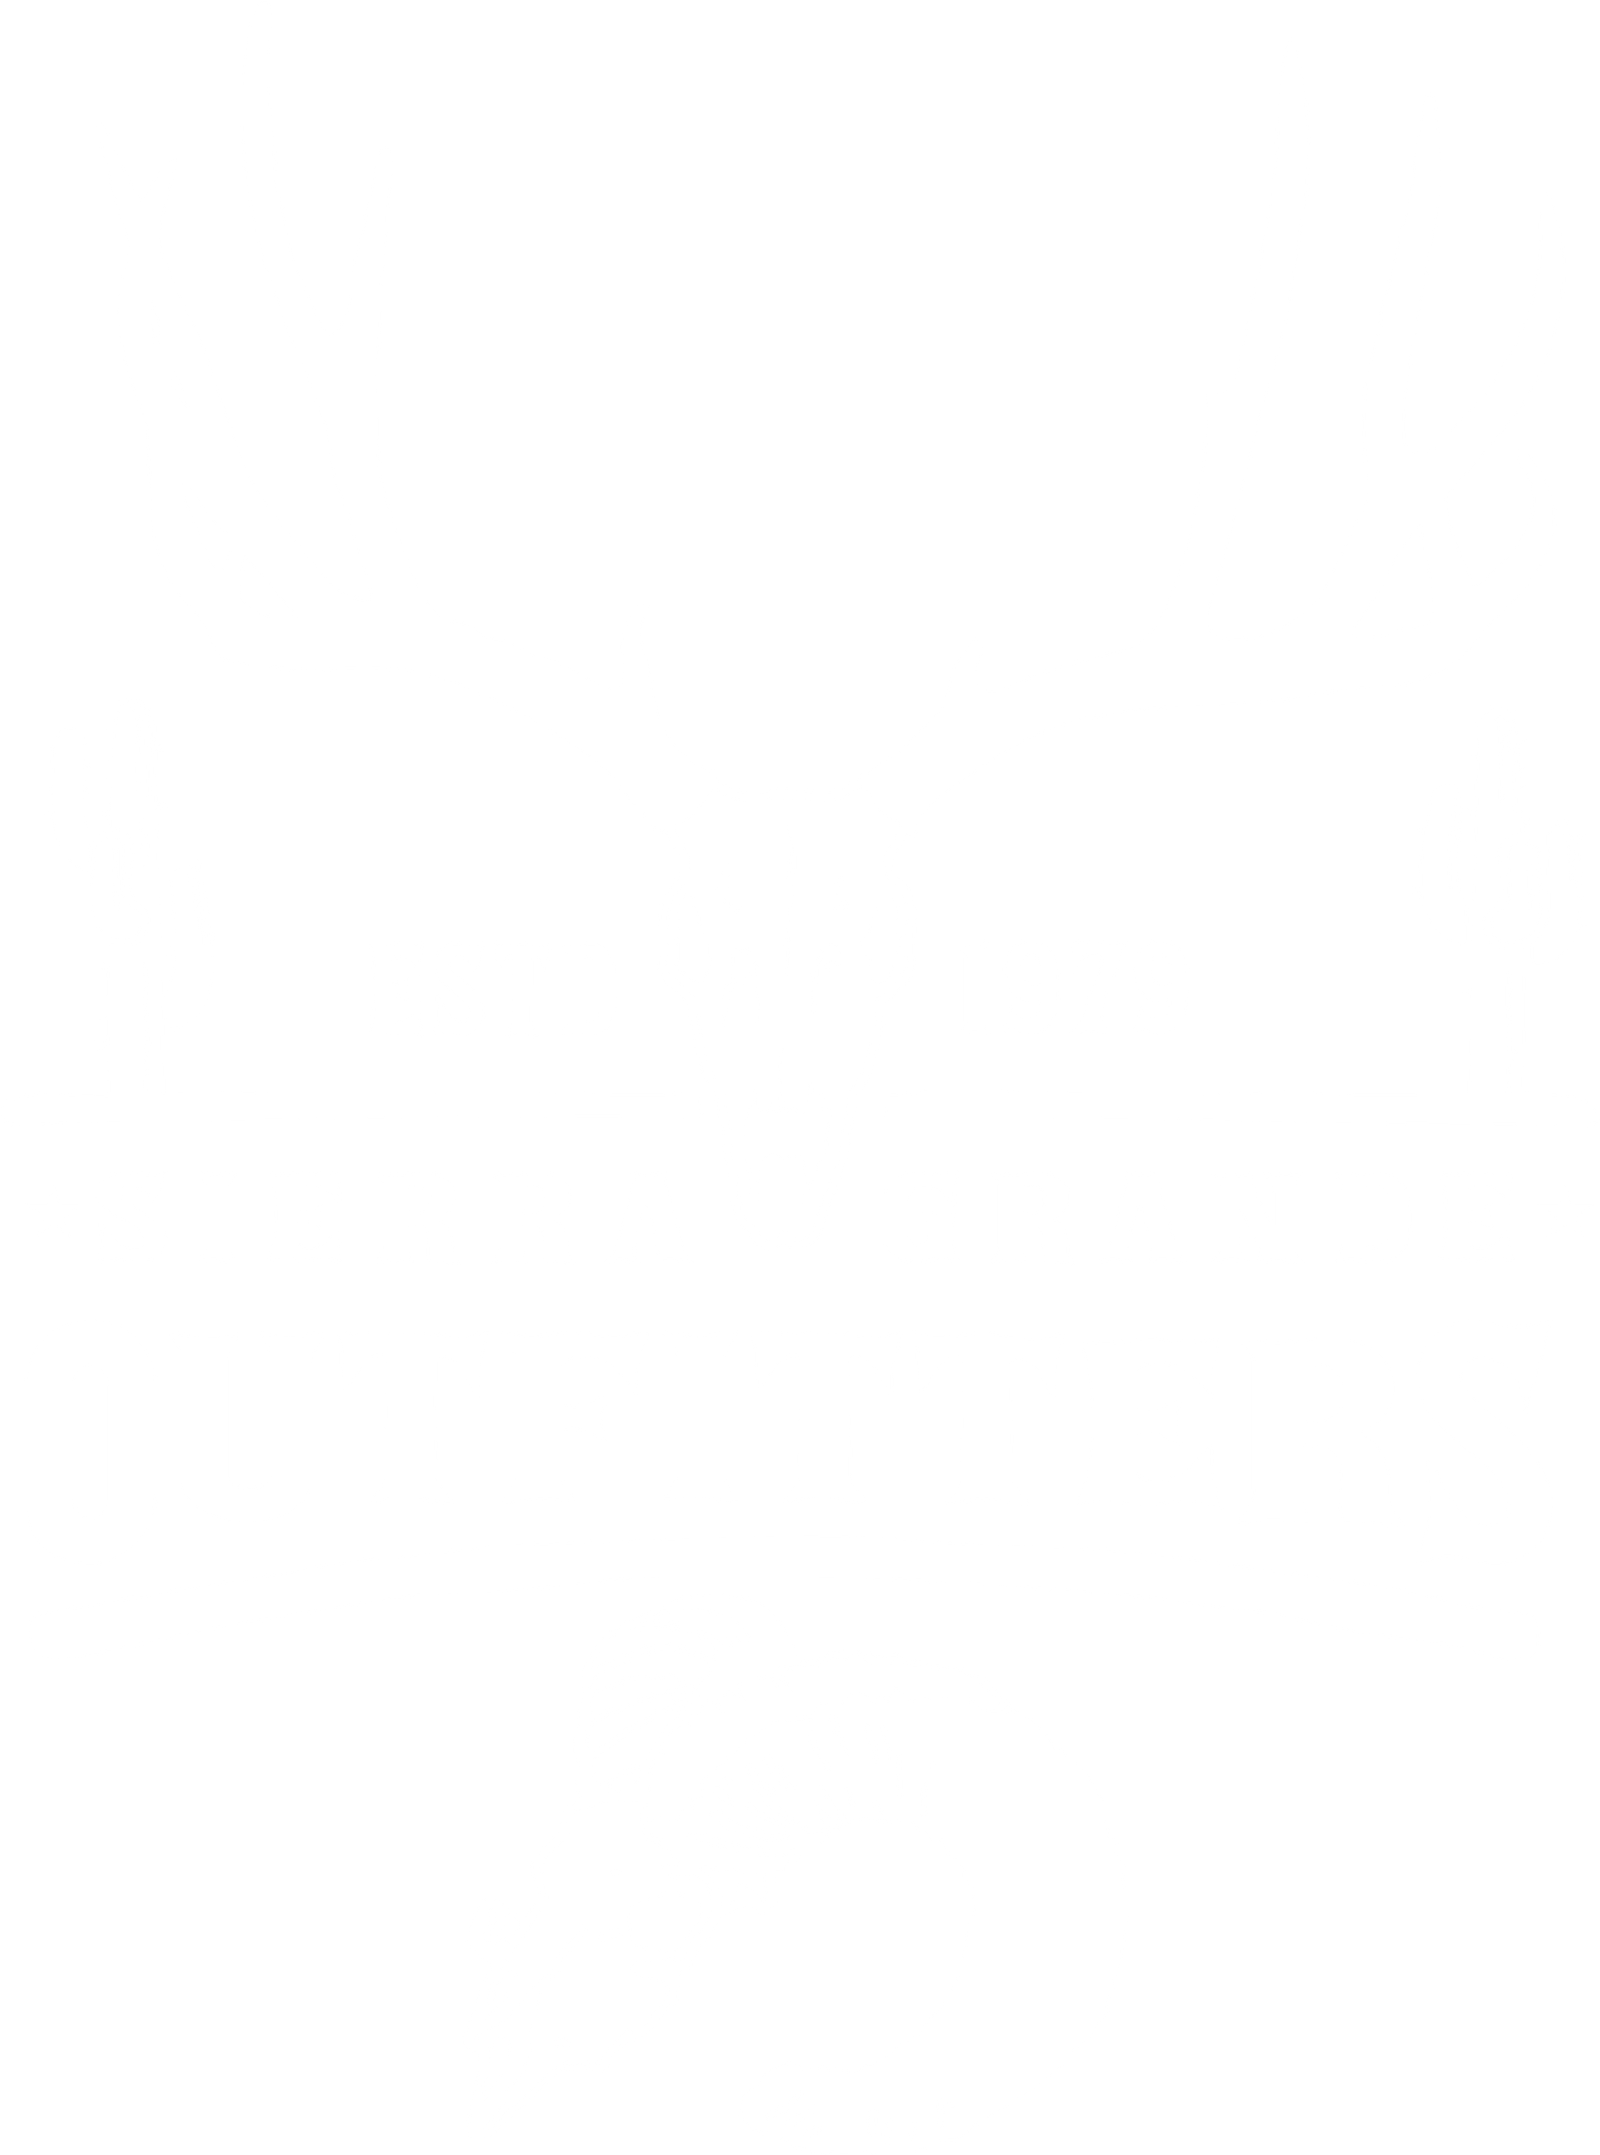 Sierra Grande Outfitters